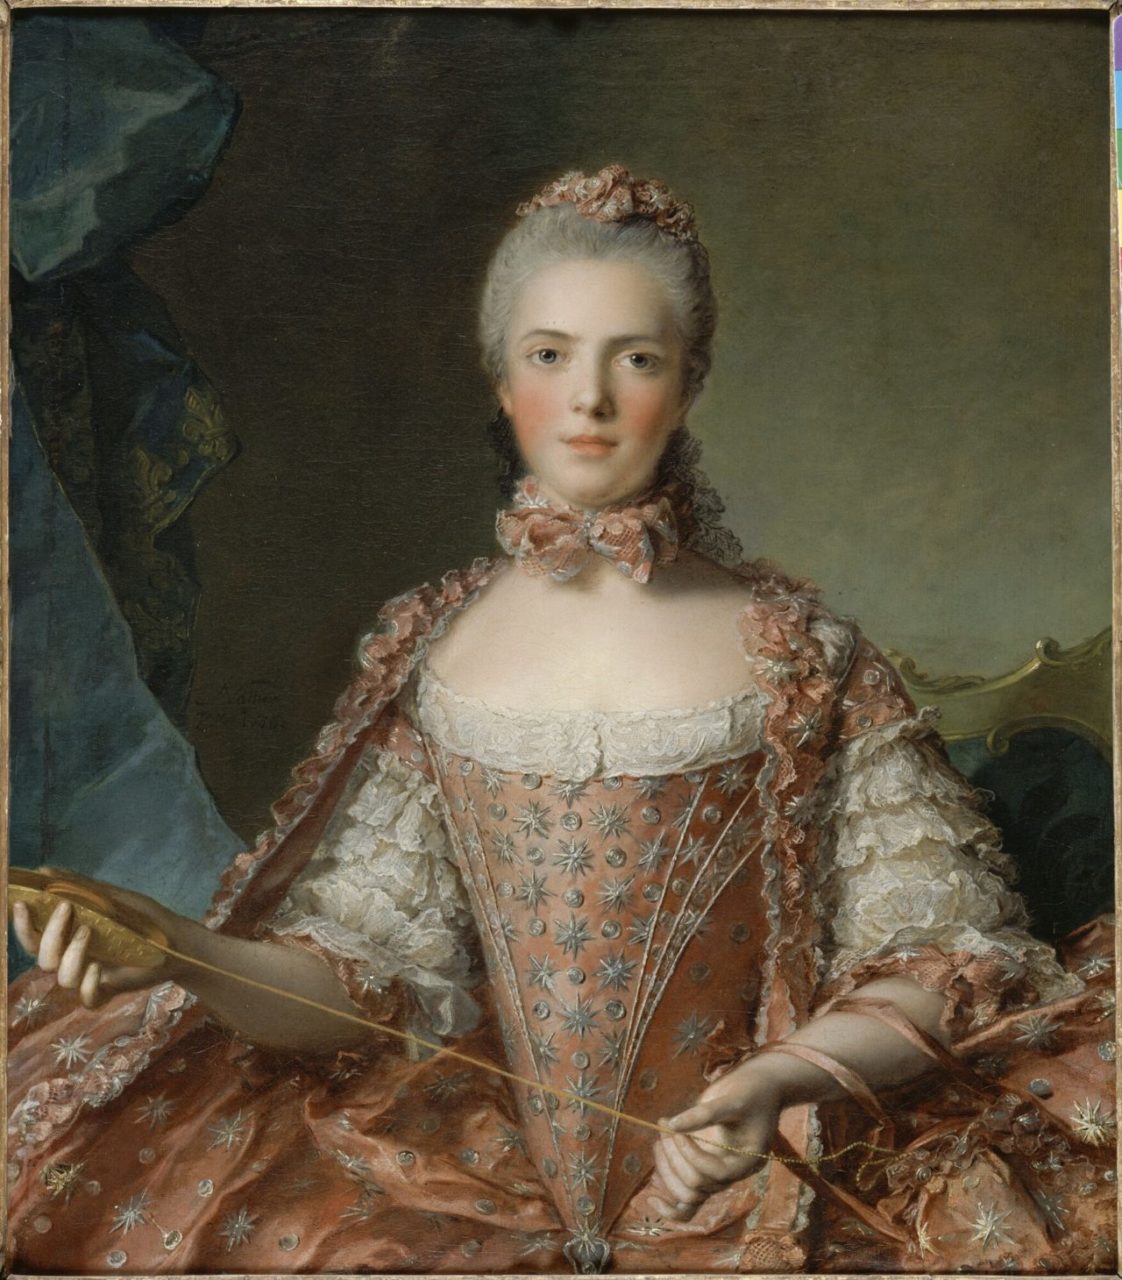 Marie-Adélaïde of France making knots